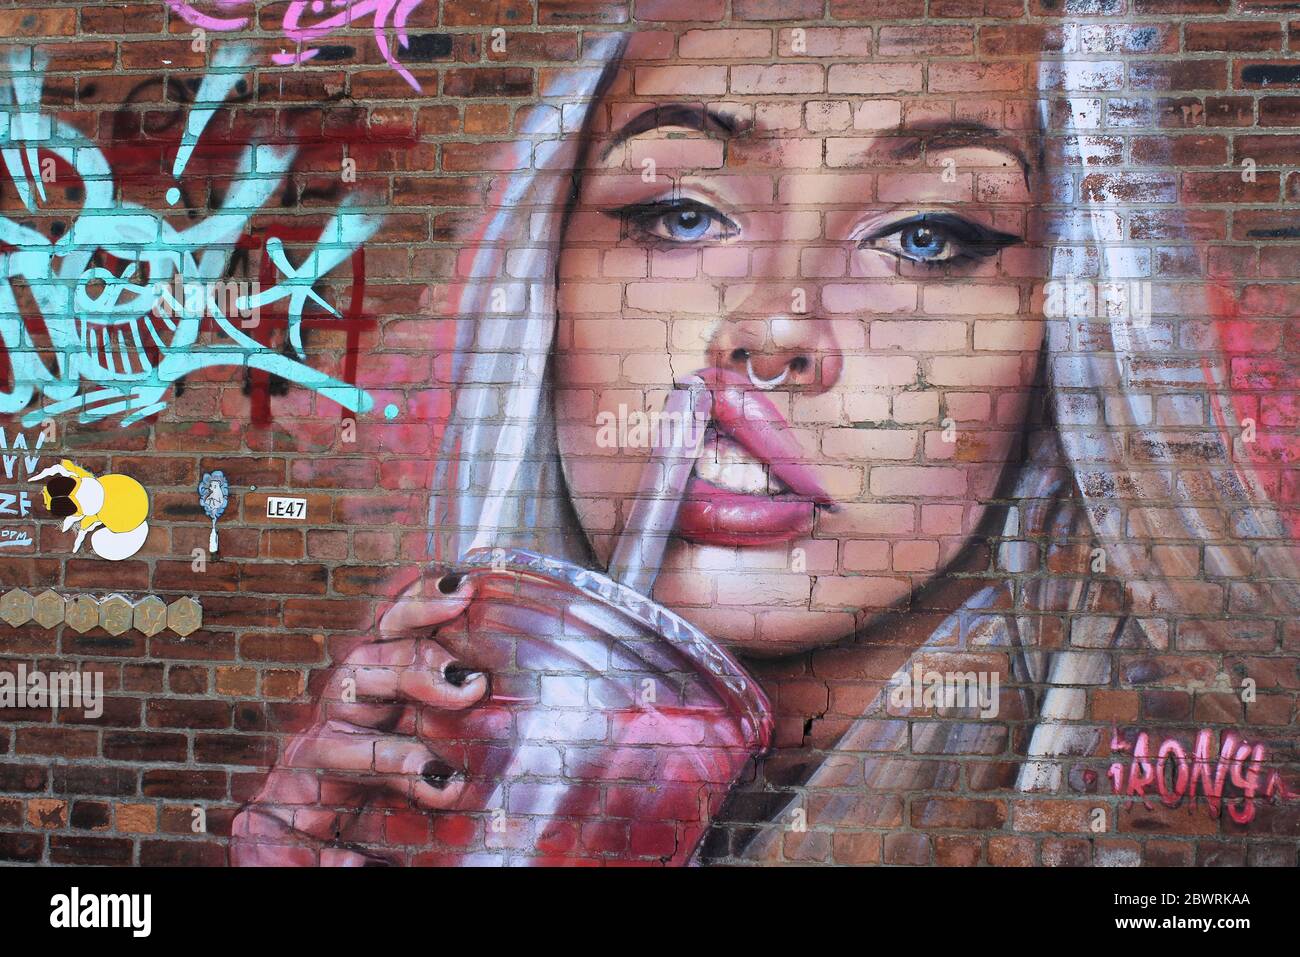 Graffiti - Teenage Girl With Attitude by Irony Stock Photo